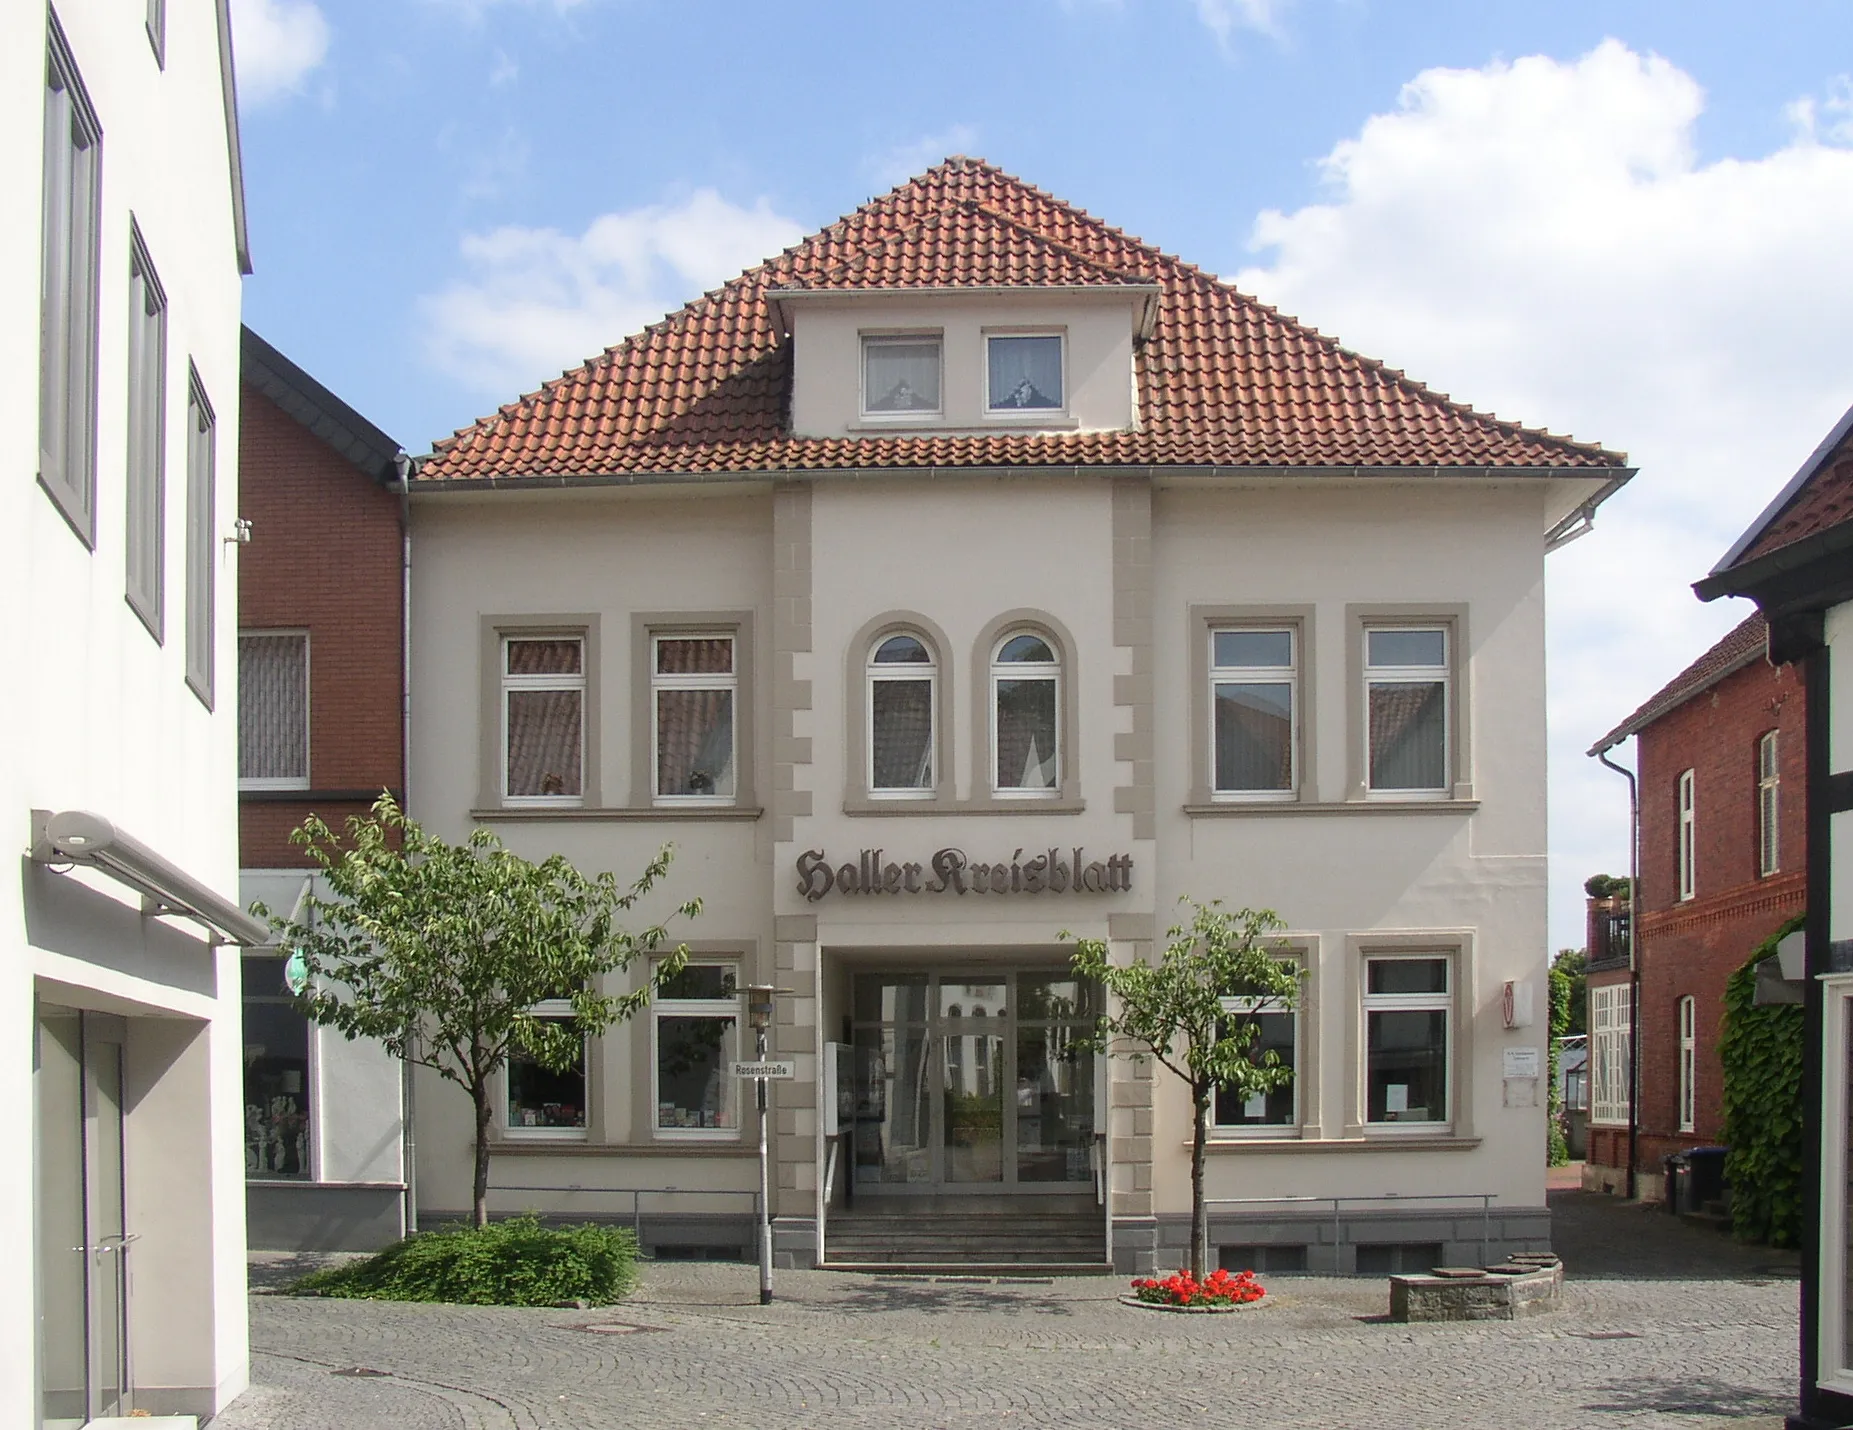 Photo showing: branch office of Haller Kreisblatt Newspaper in Halle (Westfalen), county of Gütersloh, Germany